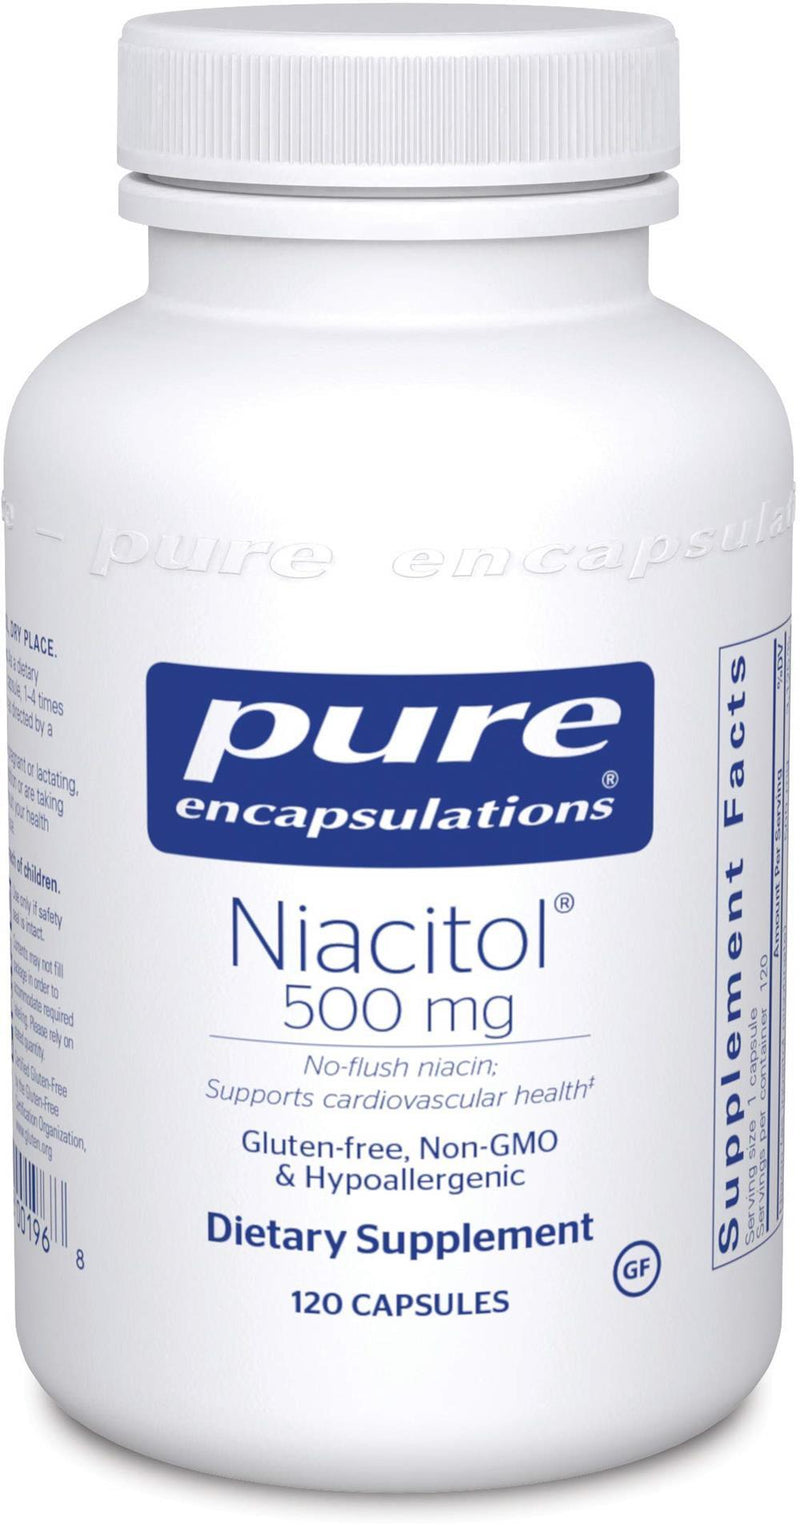 Pure Encapsulations Niacitol 500 mg -- 60 Capsules 120 capsules